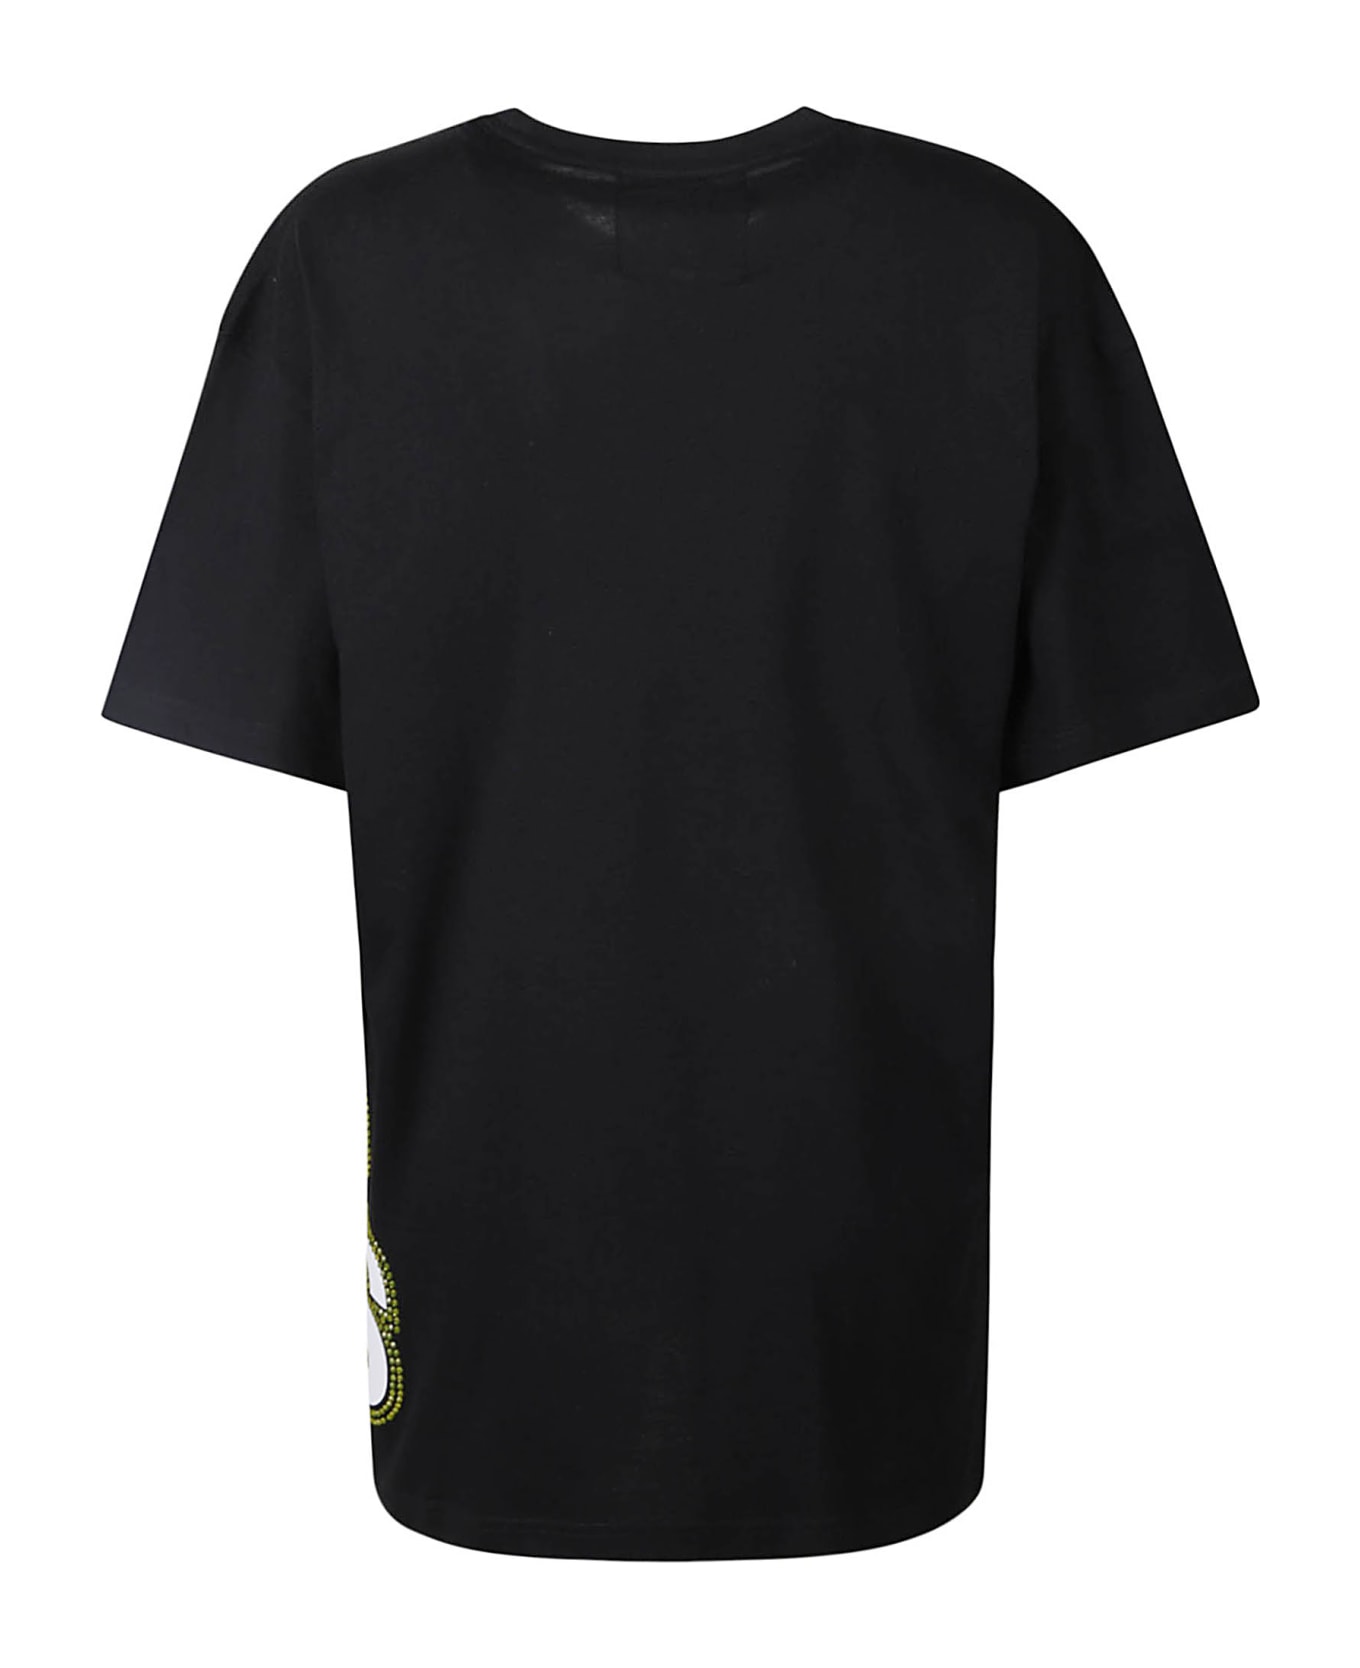 Adidas Logo Large T-shirt - Black/Yellow